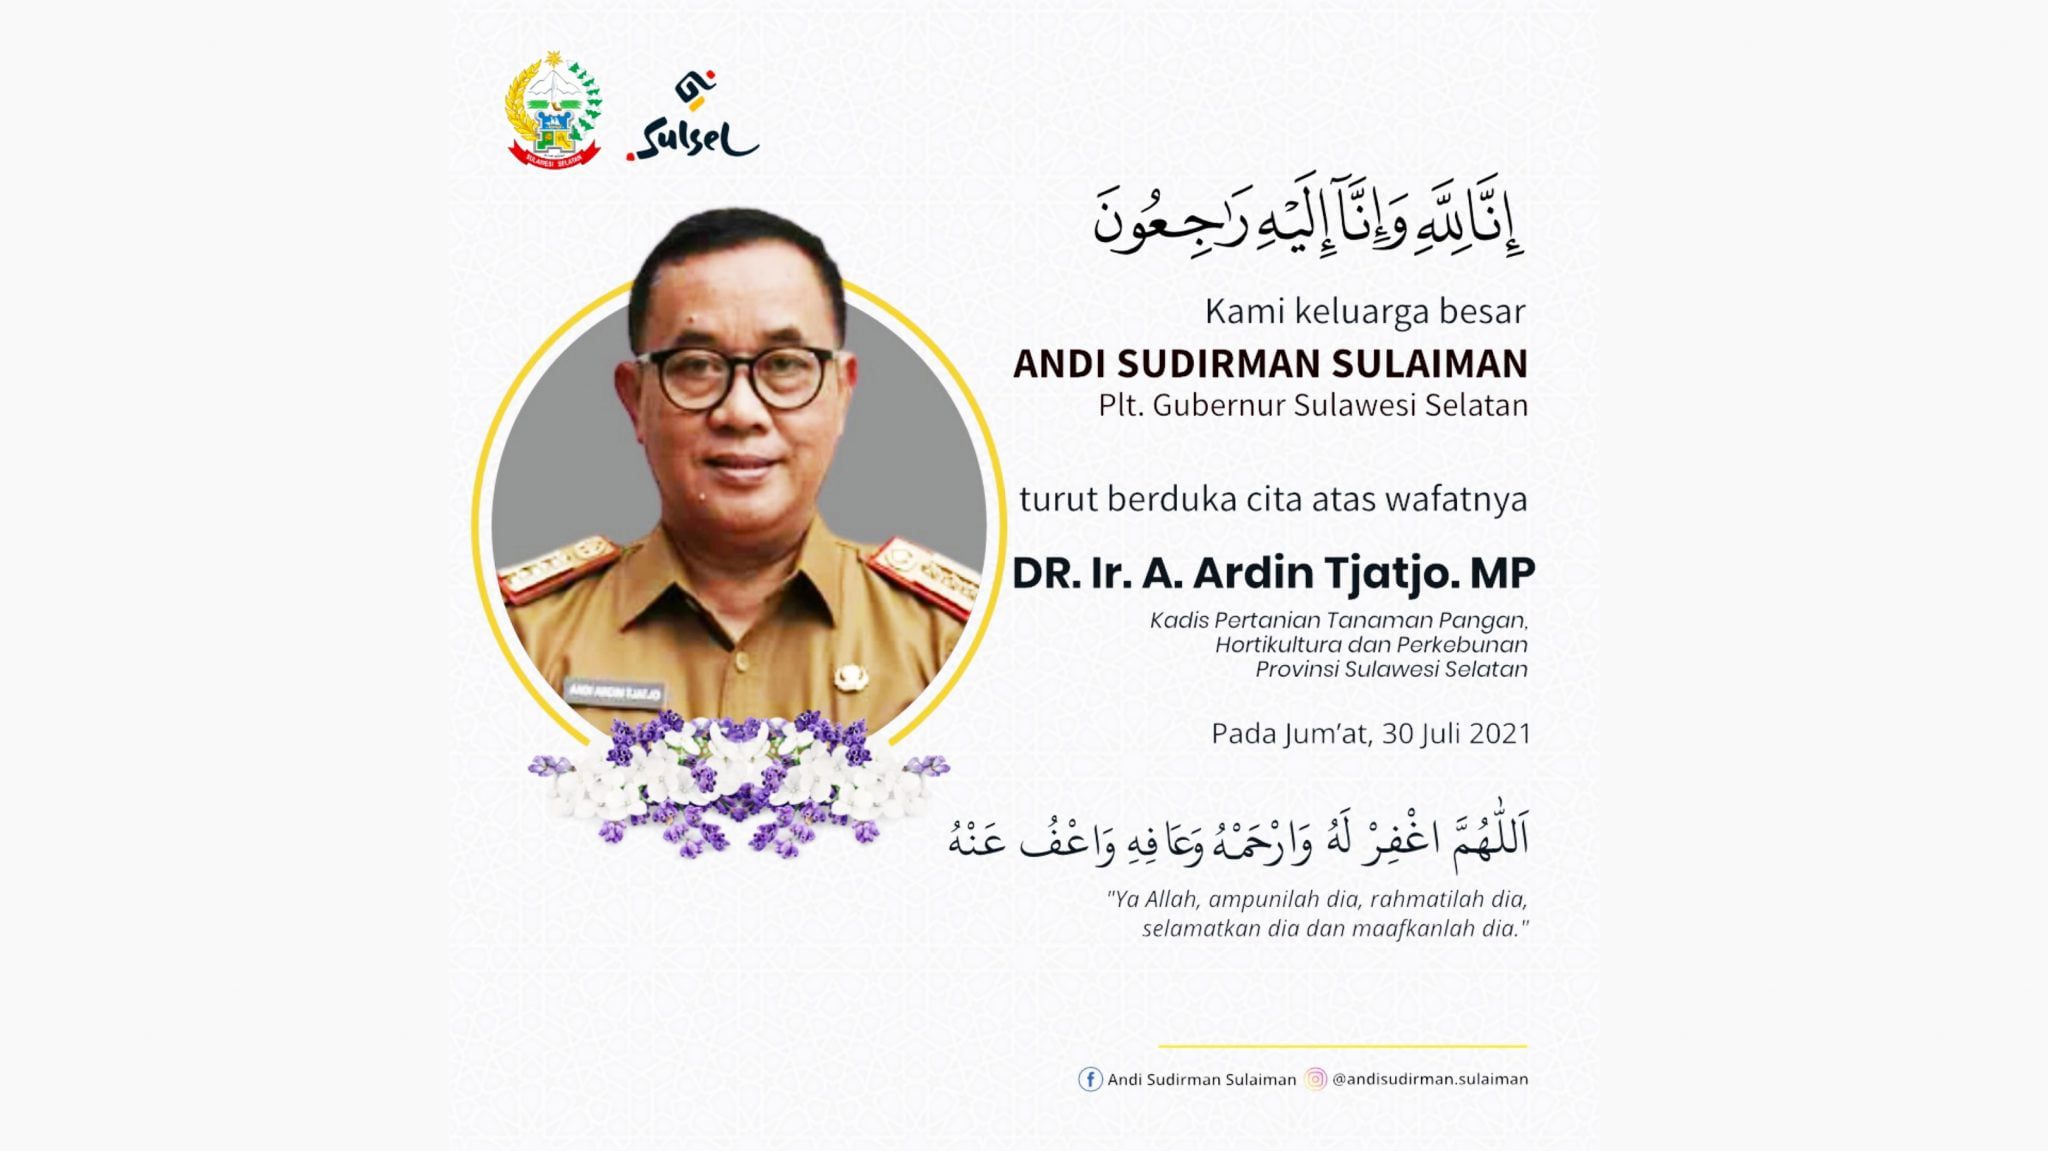 Pemerintah Provinsi Sulawesi Selatan menyampaikan duka cita mendalam atas meninggalnya Kepala Dinas Pertanian Tanaman Pangan, Hortikultura, dan Perkebunan Sulawesi Selatan, DR. Ir. A. Ardin Tjatjo, MP